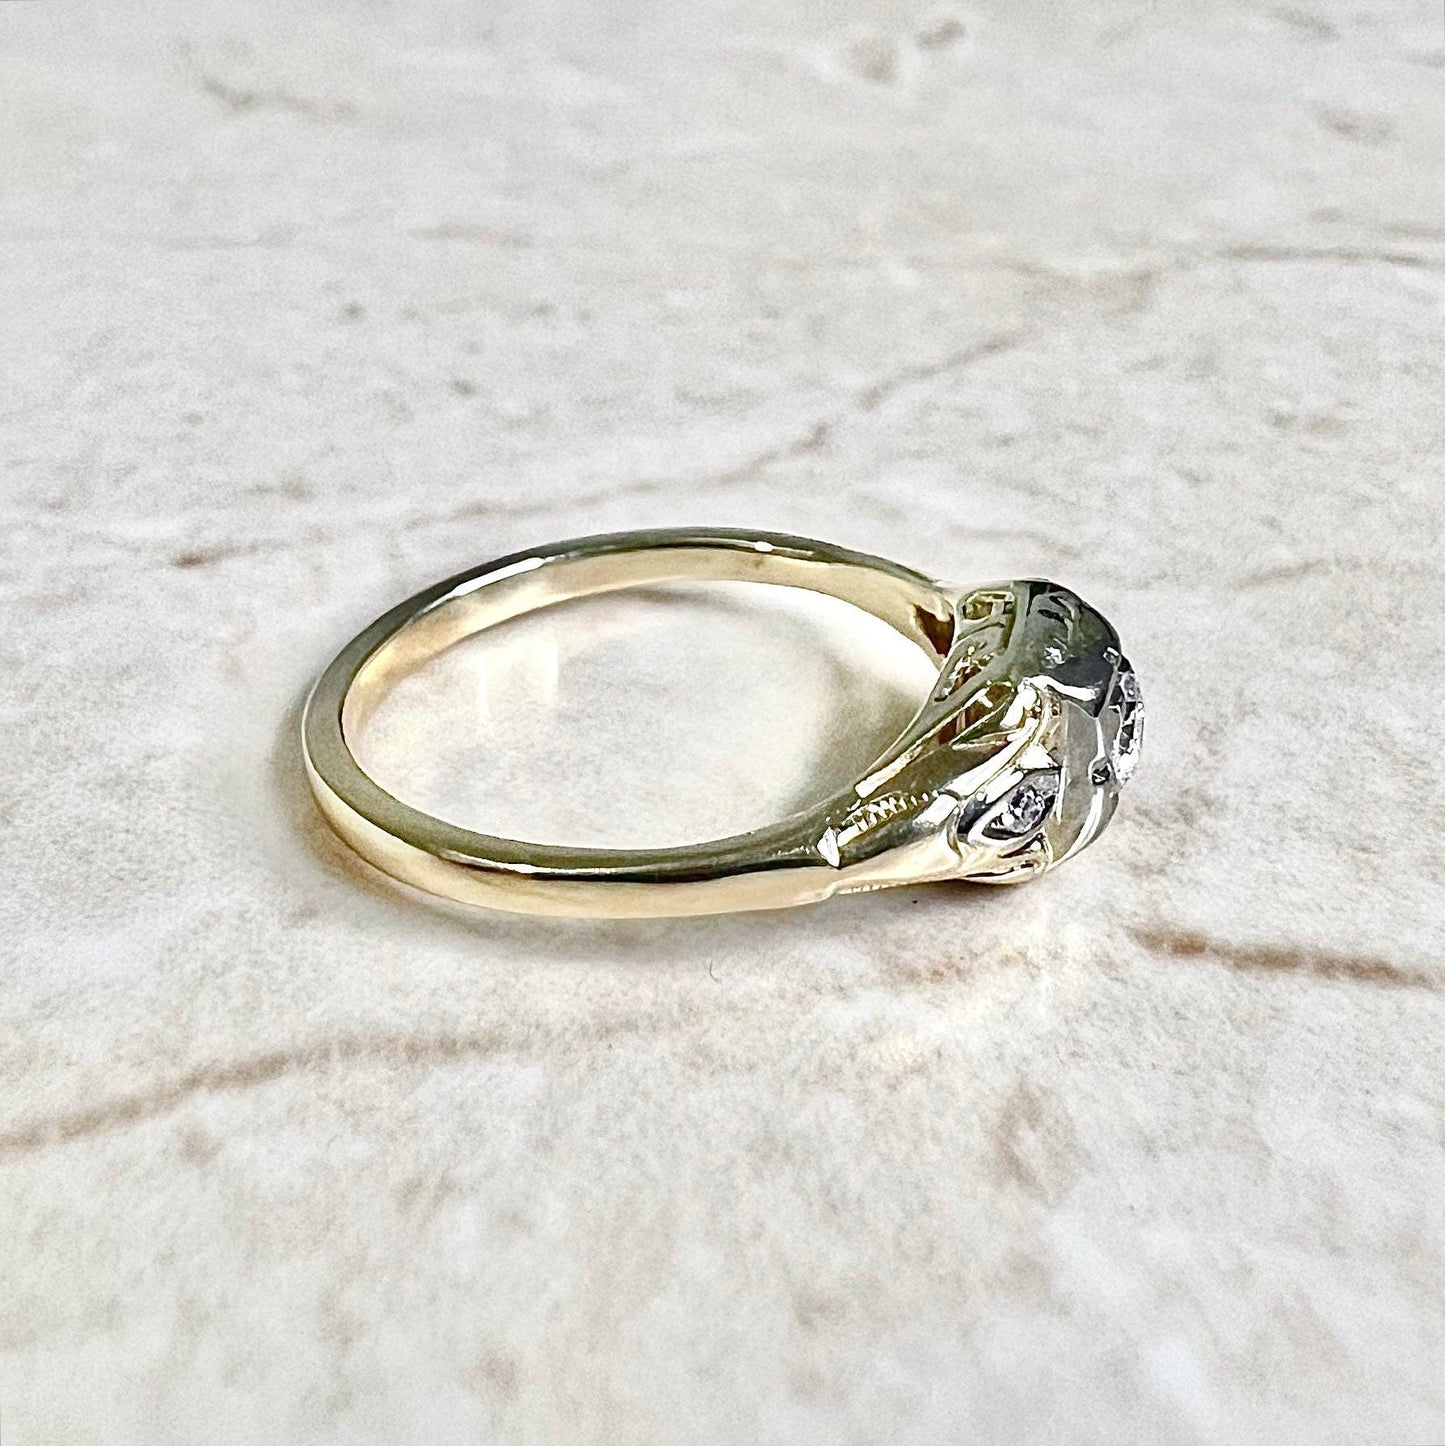 Vintage Art Deco Diamond Engagement Ring Circa 1935 - 14K Two Tone Gold Vintage Solitaire - Diamond Wedding Ring -Art Deco Ring-Promise Ring